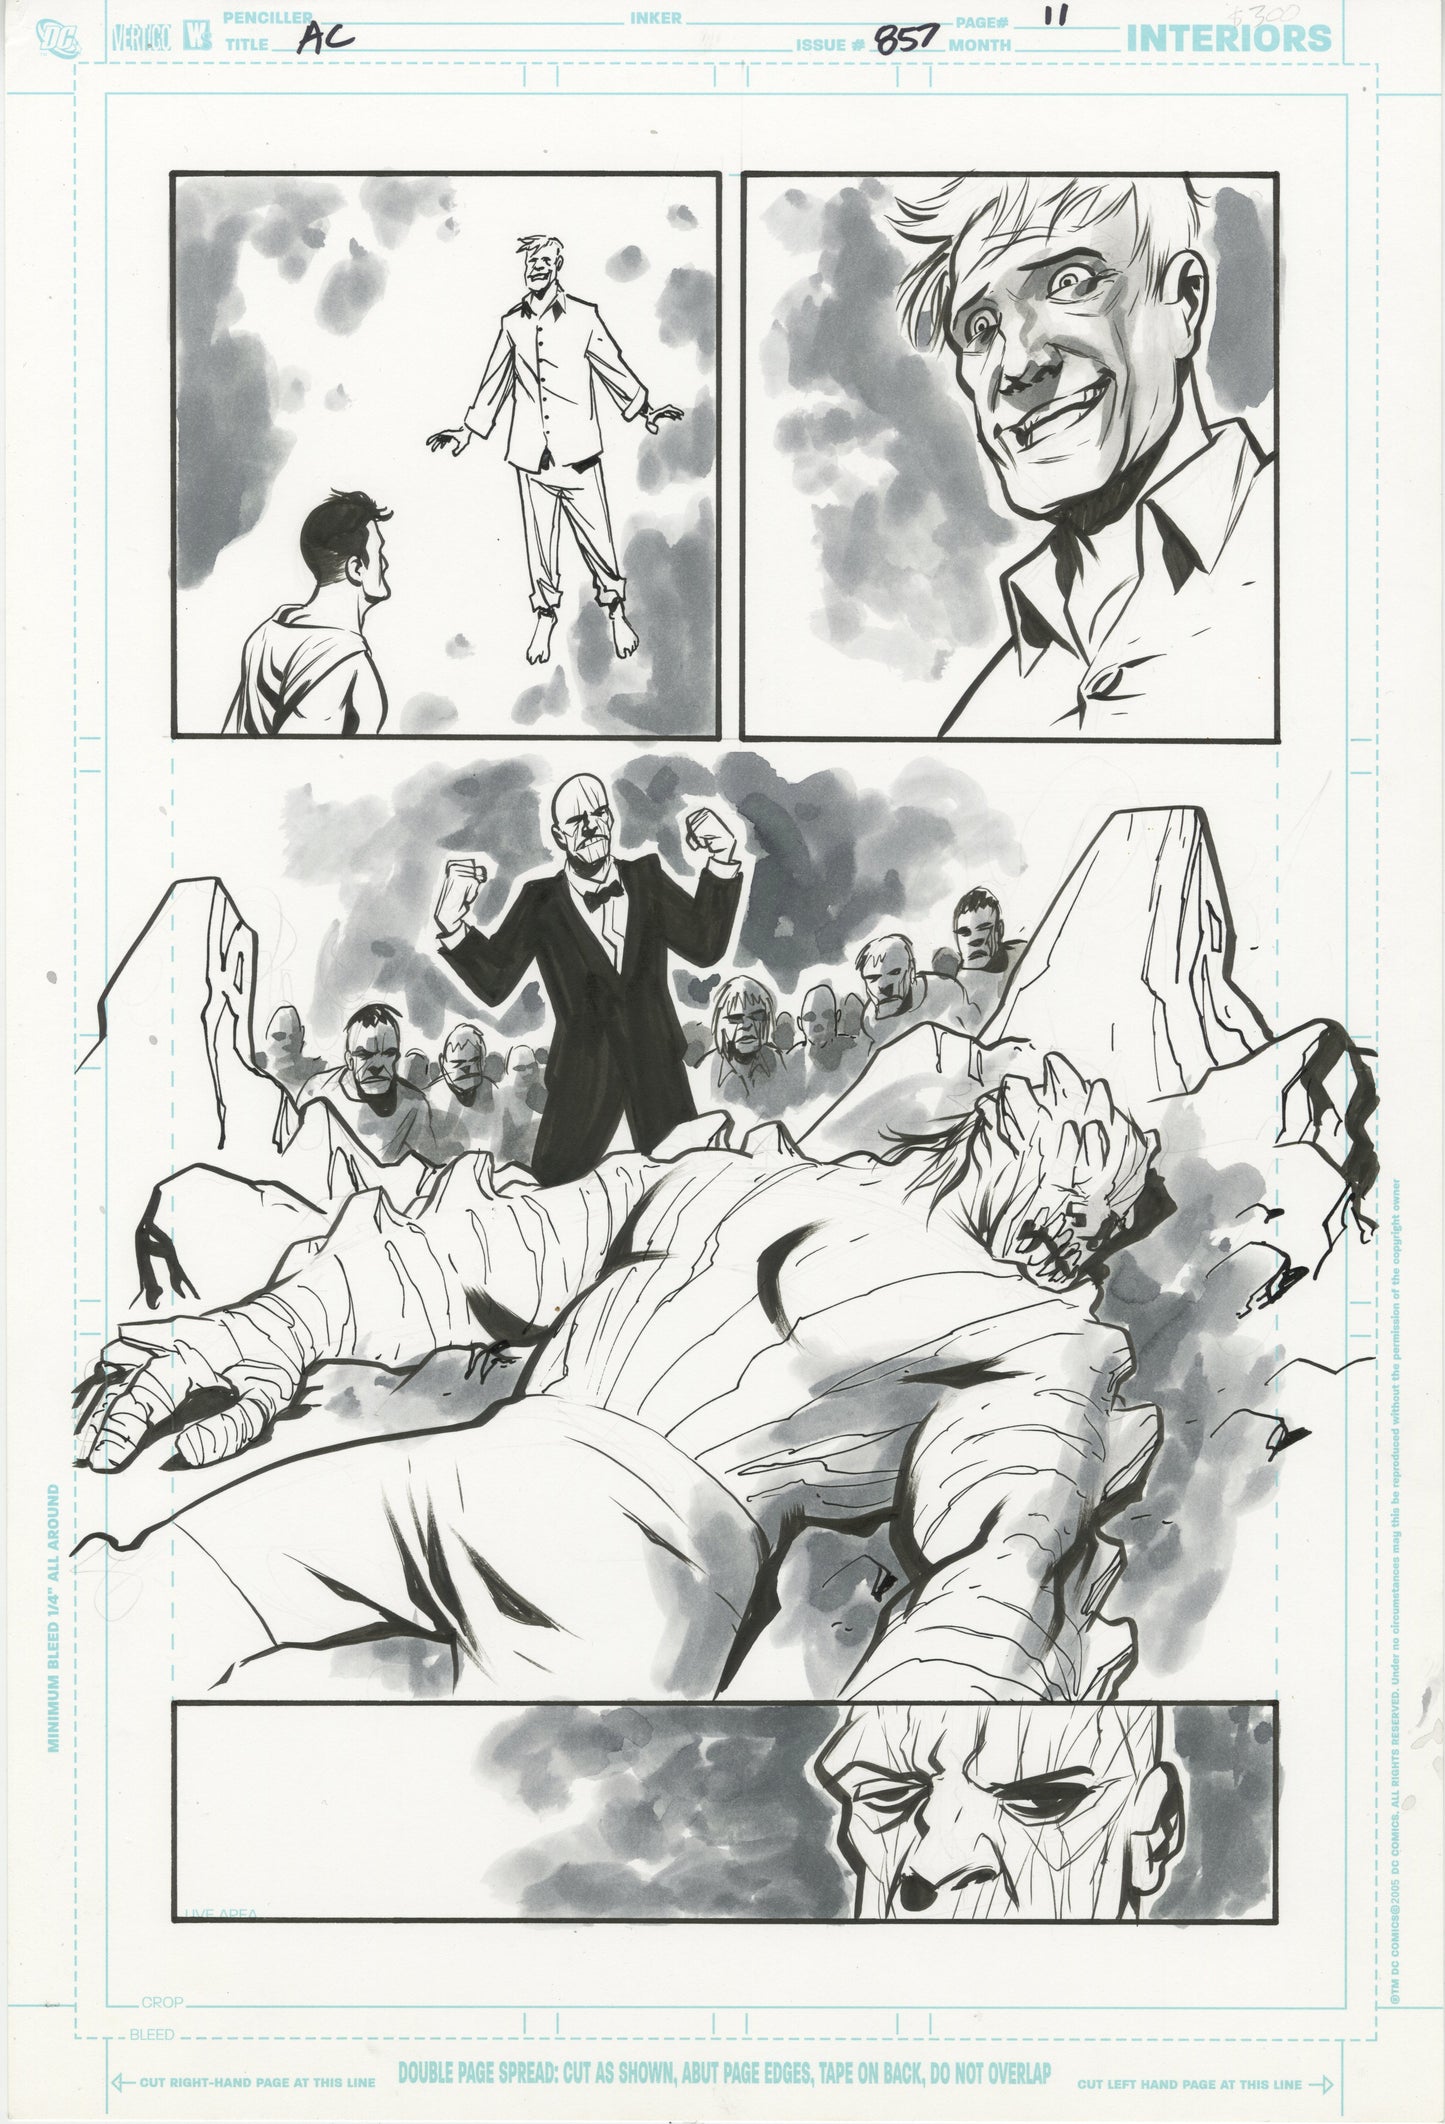 Action Comics #857, Page #11 (2007 DC, Superman: Escape From Bizarro World)